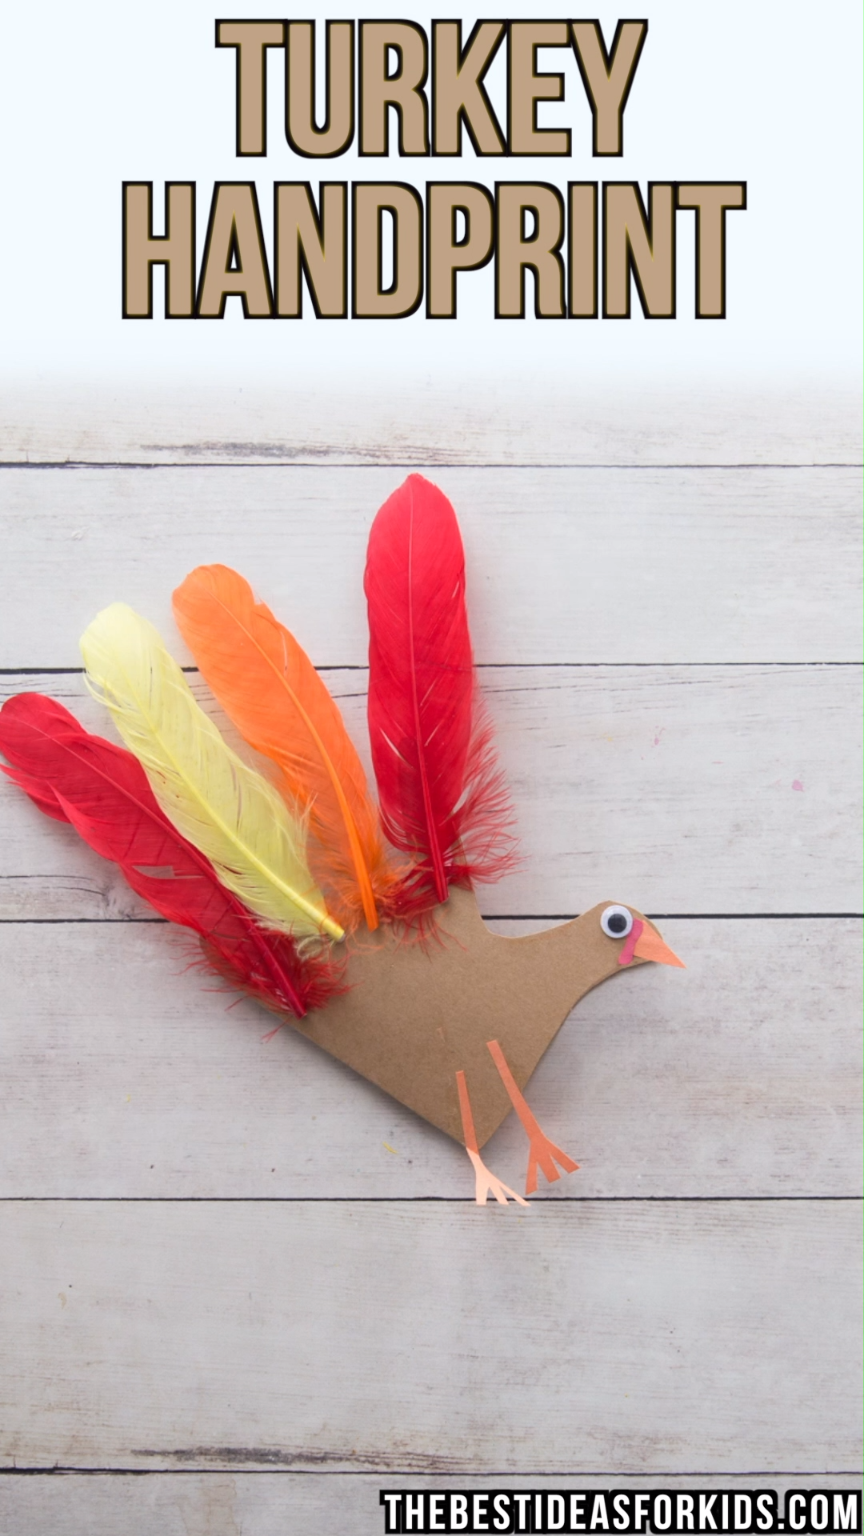 Turkey Handprint Craft With Poem - The Best Ideas for Kids -   18 diy thanksgiving crafts ideas